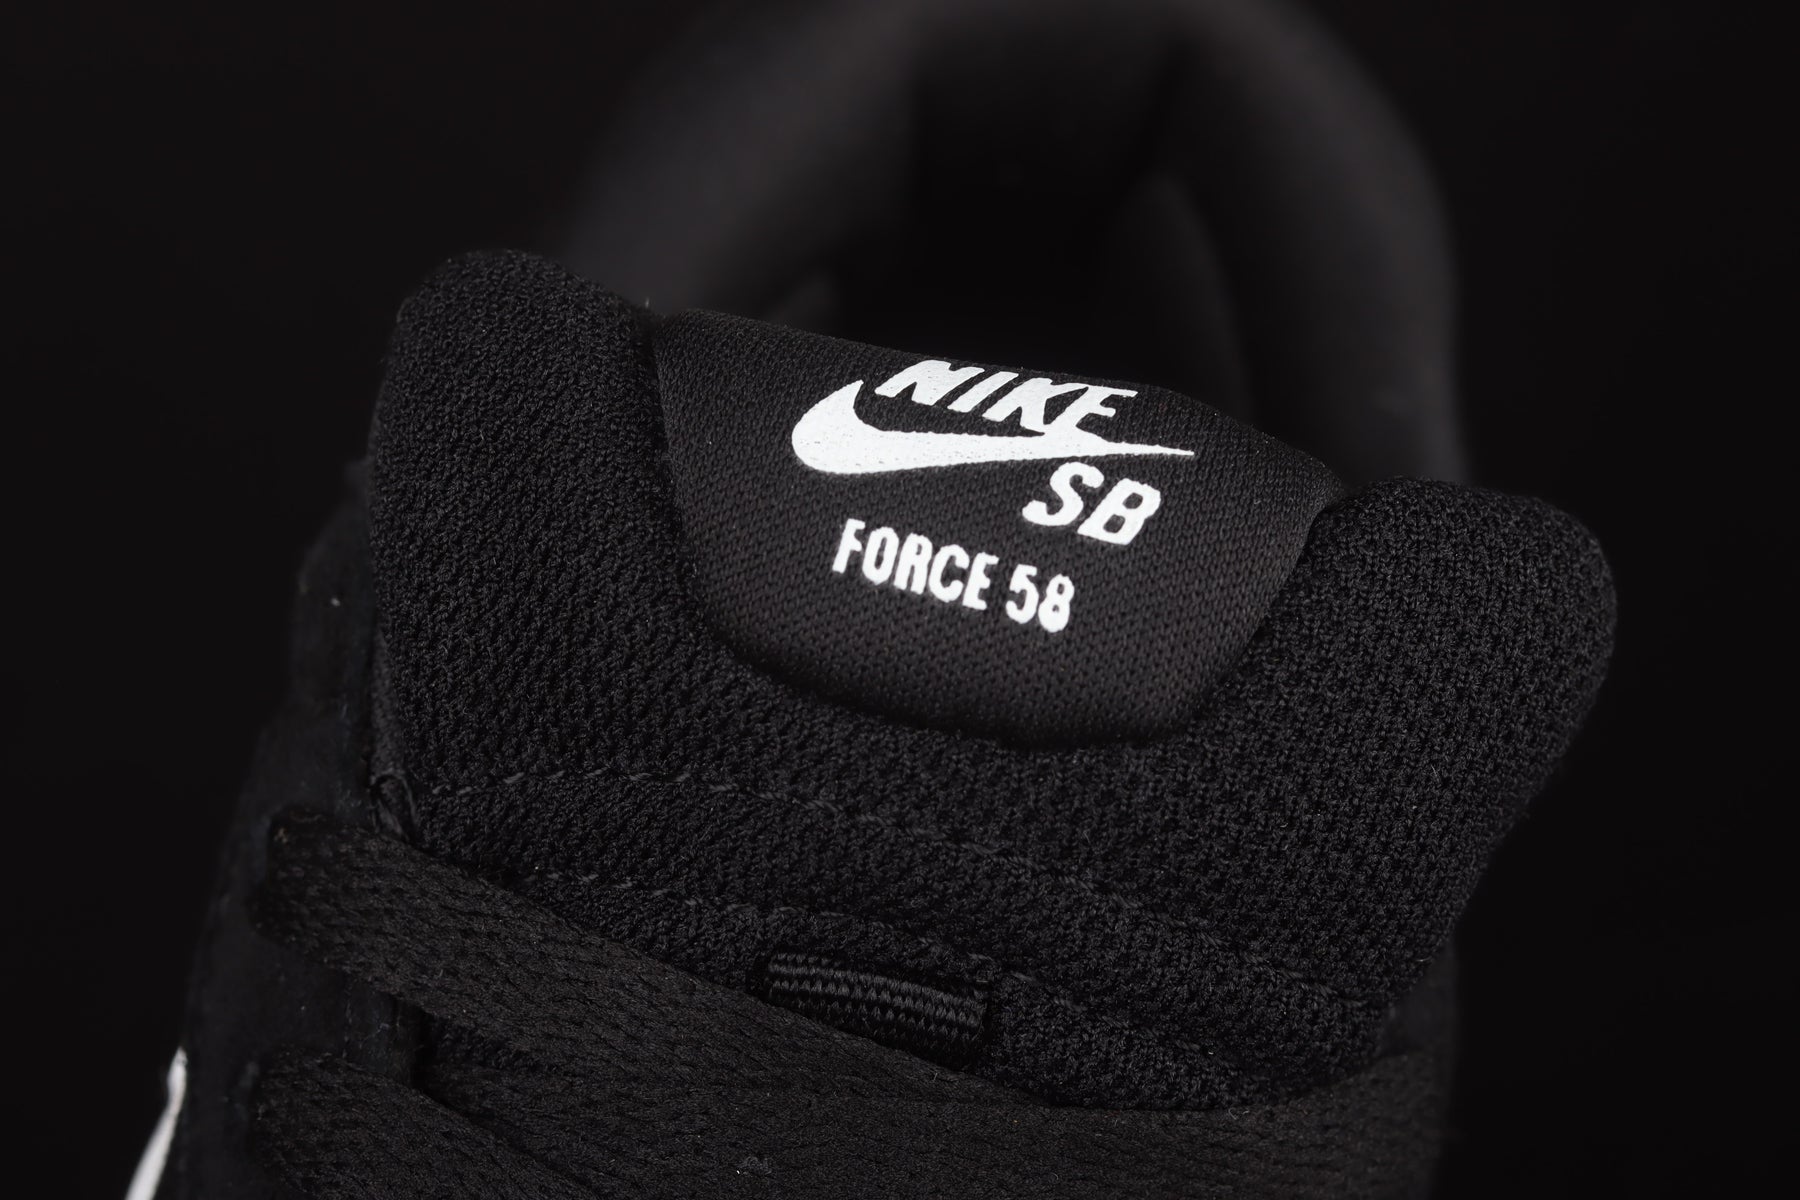 NikeMens SB Force 58 - Black